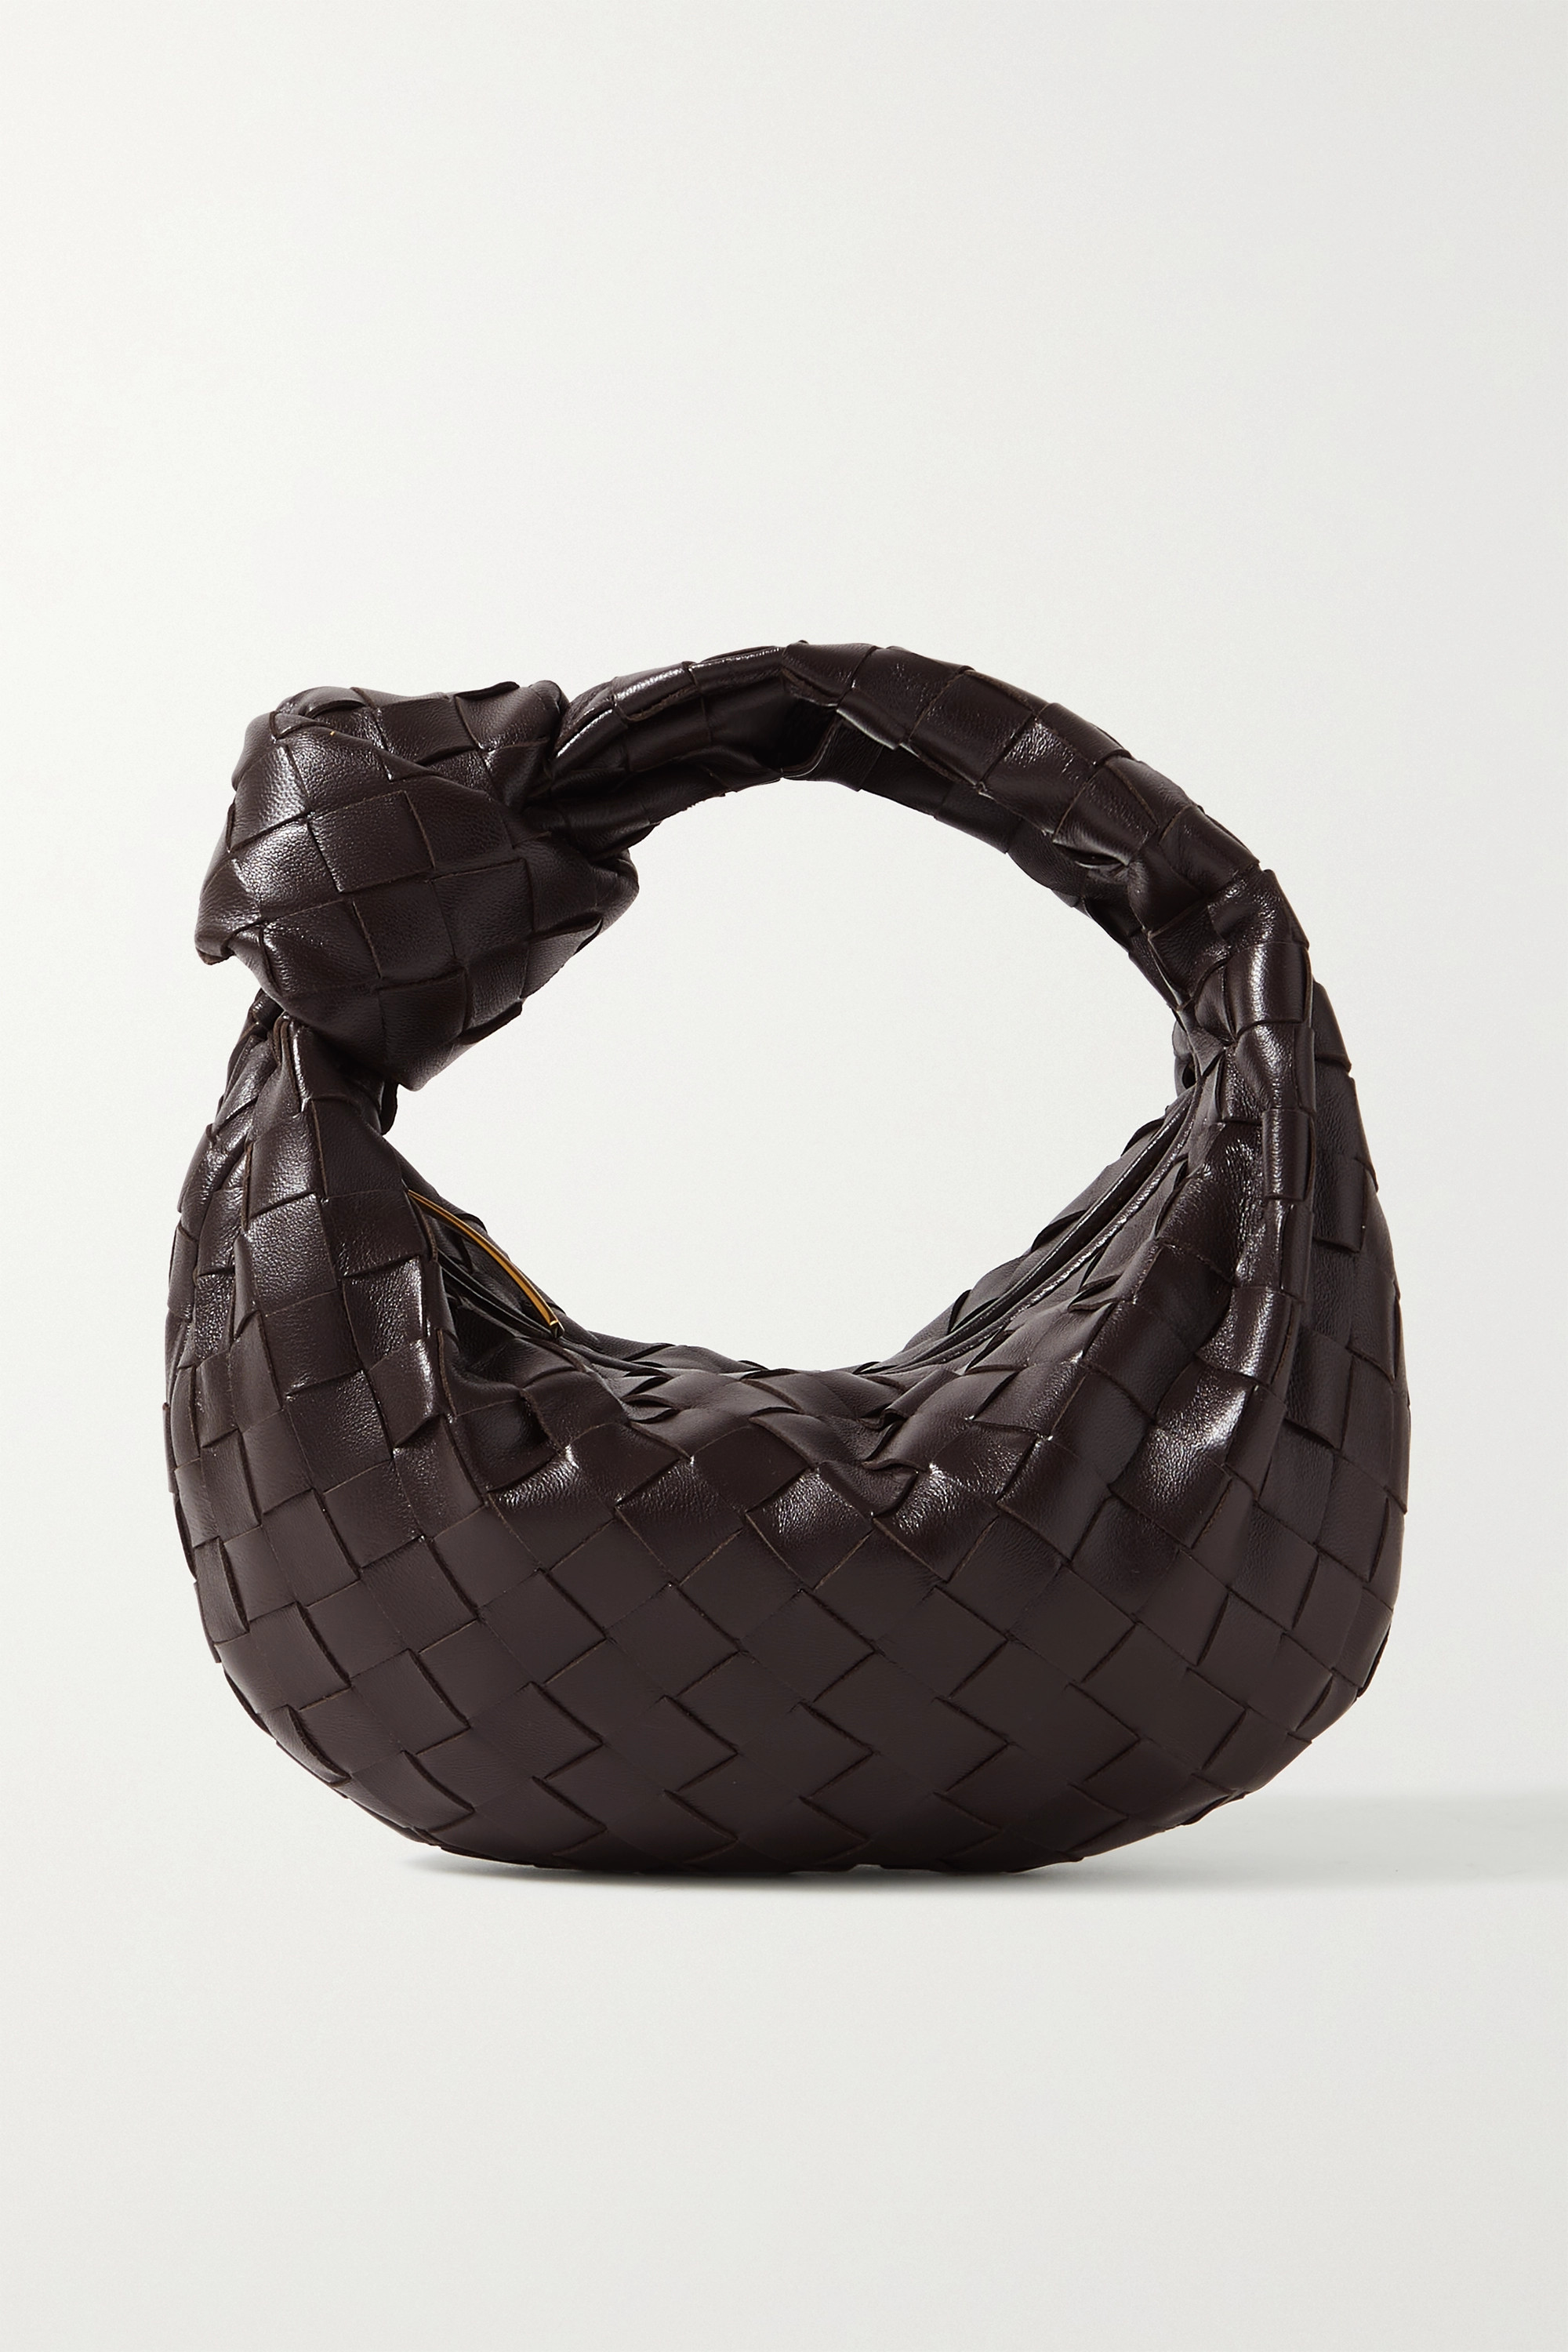 Bottega Veneta's Jodie Bag Is Officially Fashion's It Bag